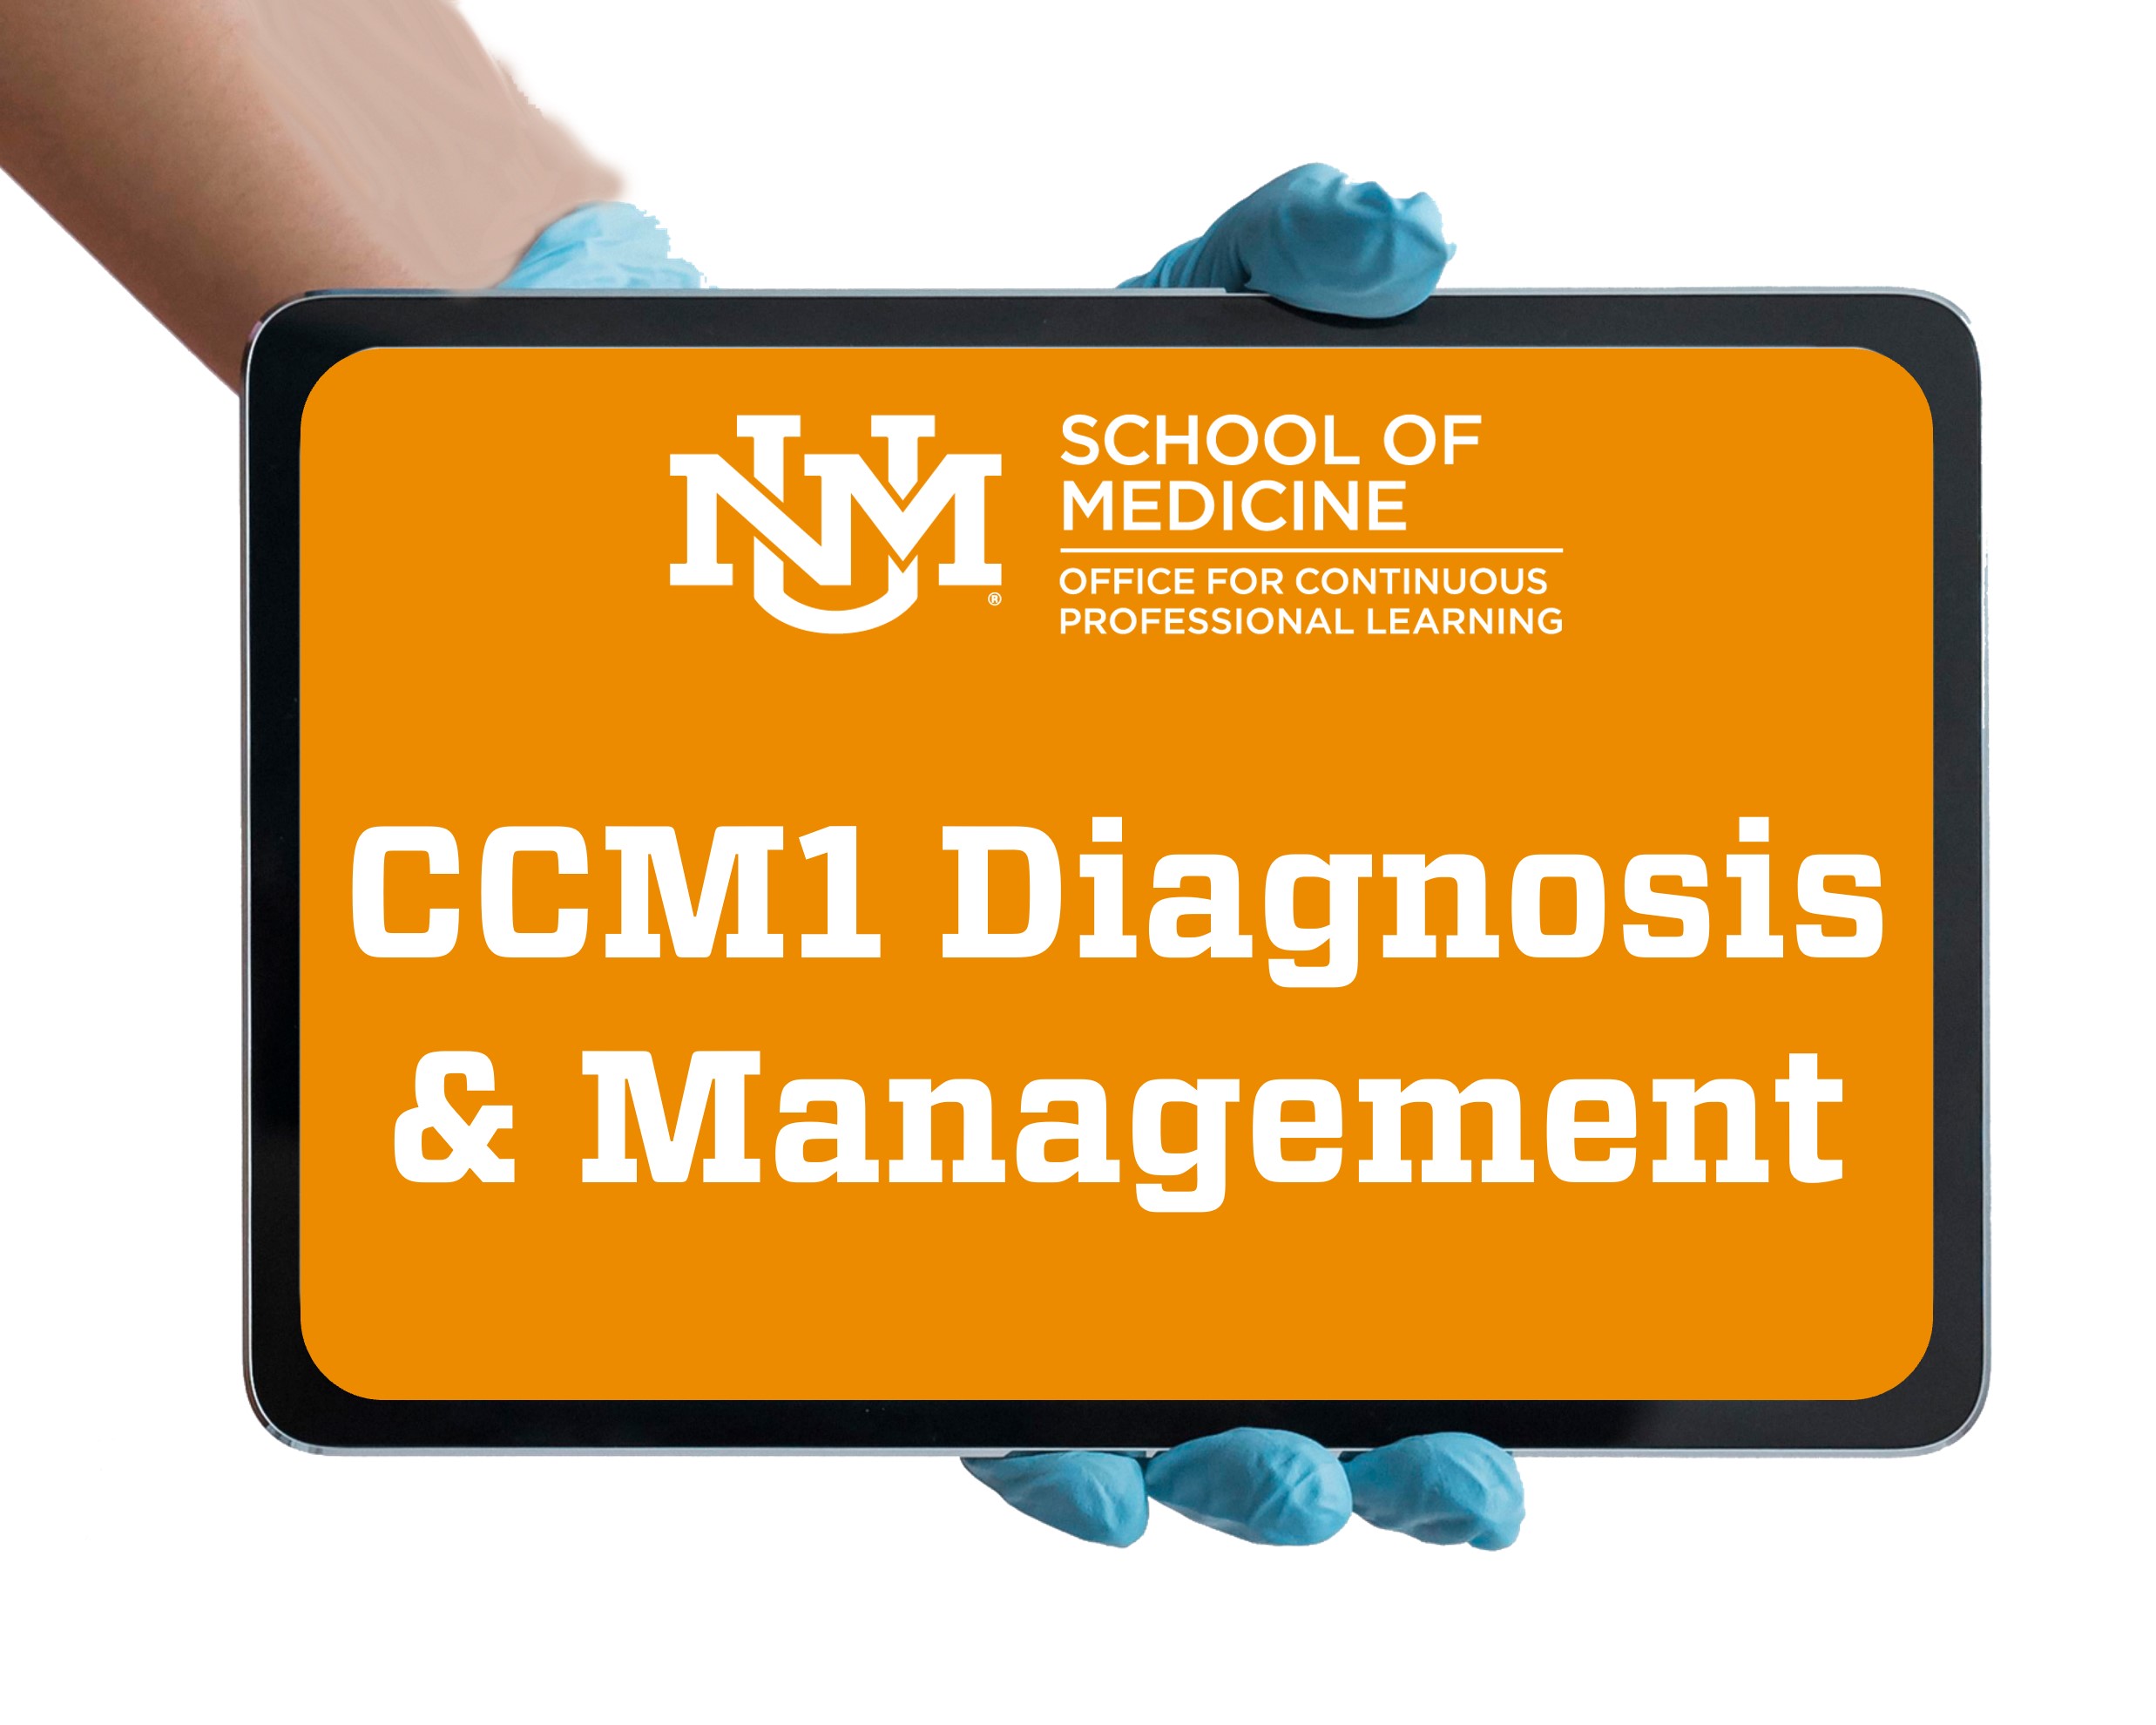 CCM1 Diagnosis and Management